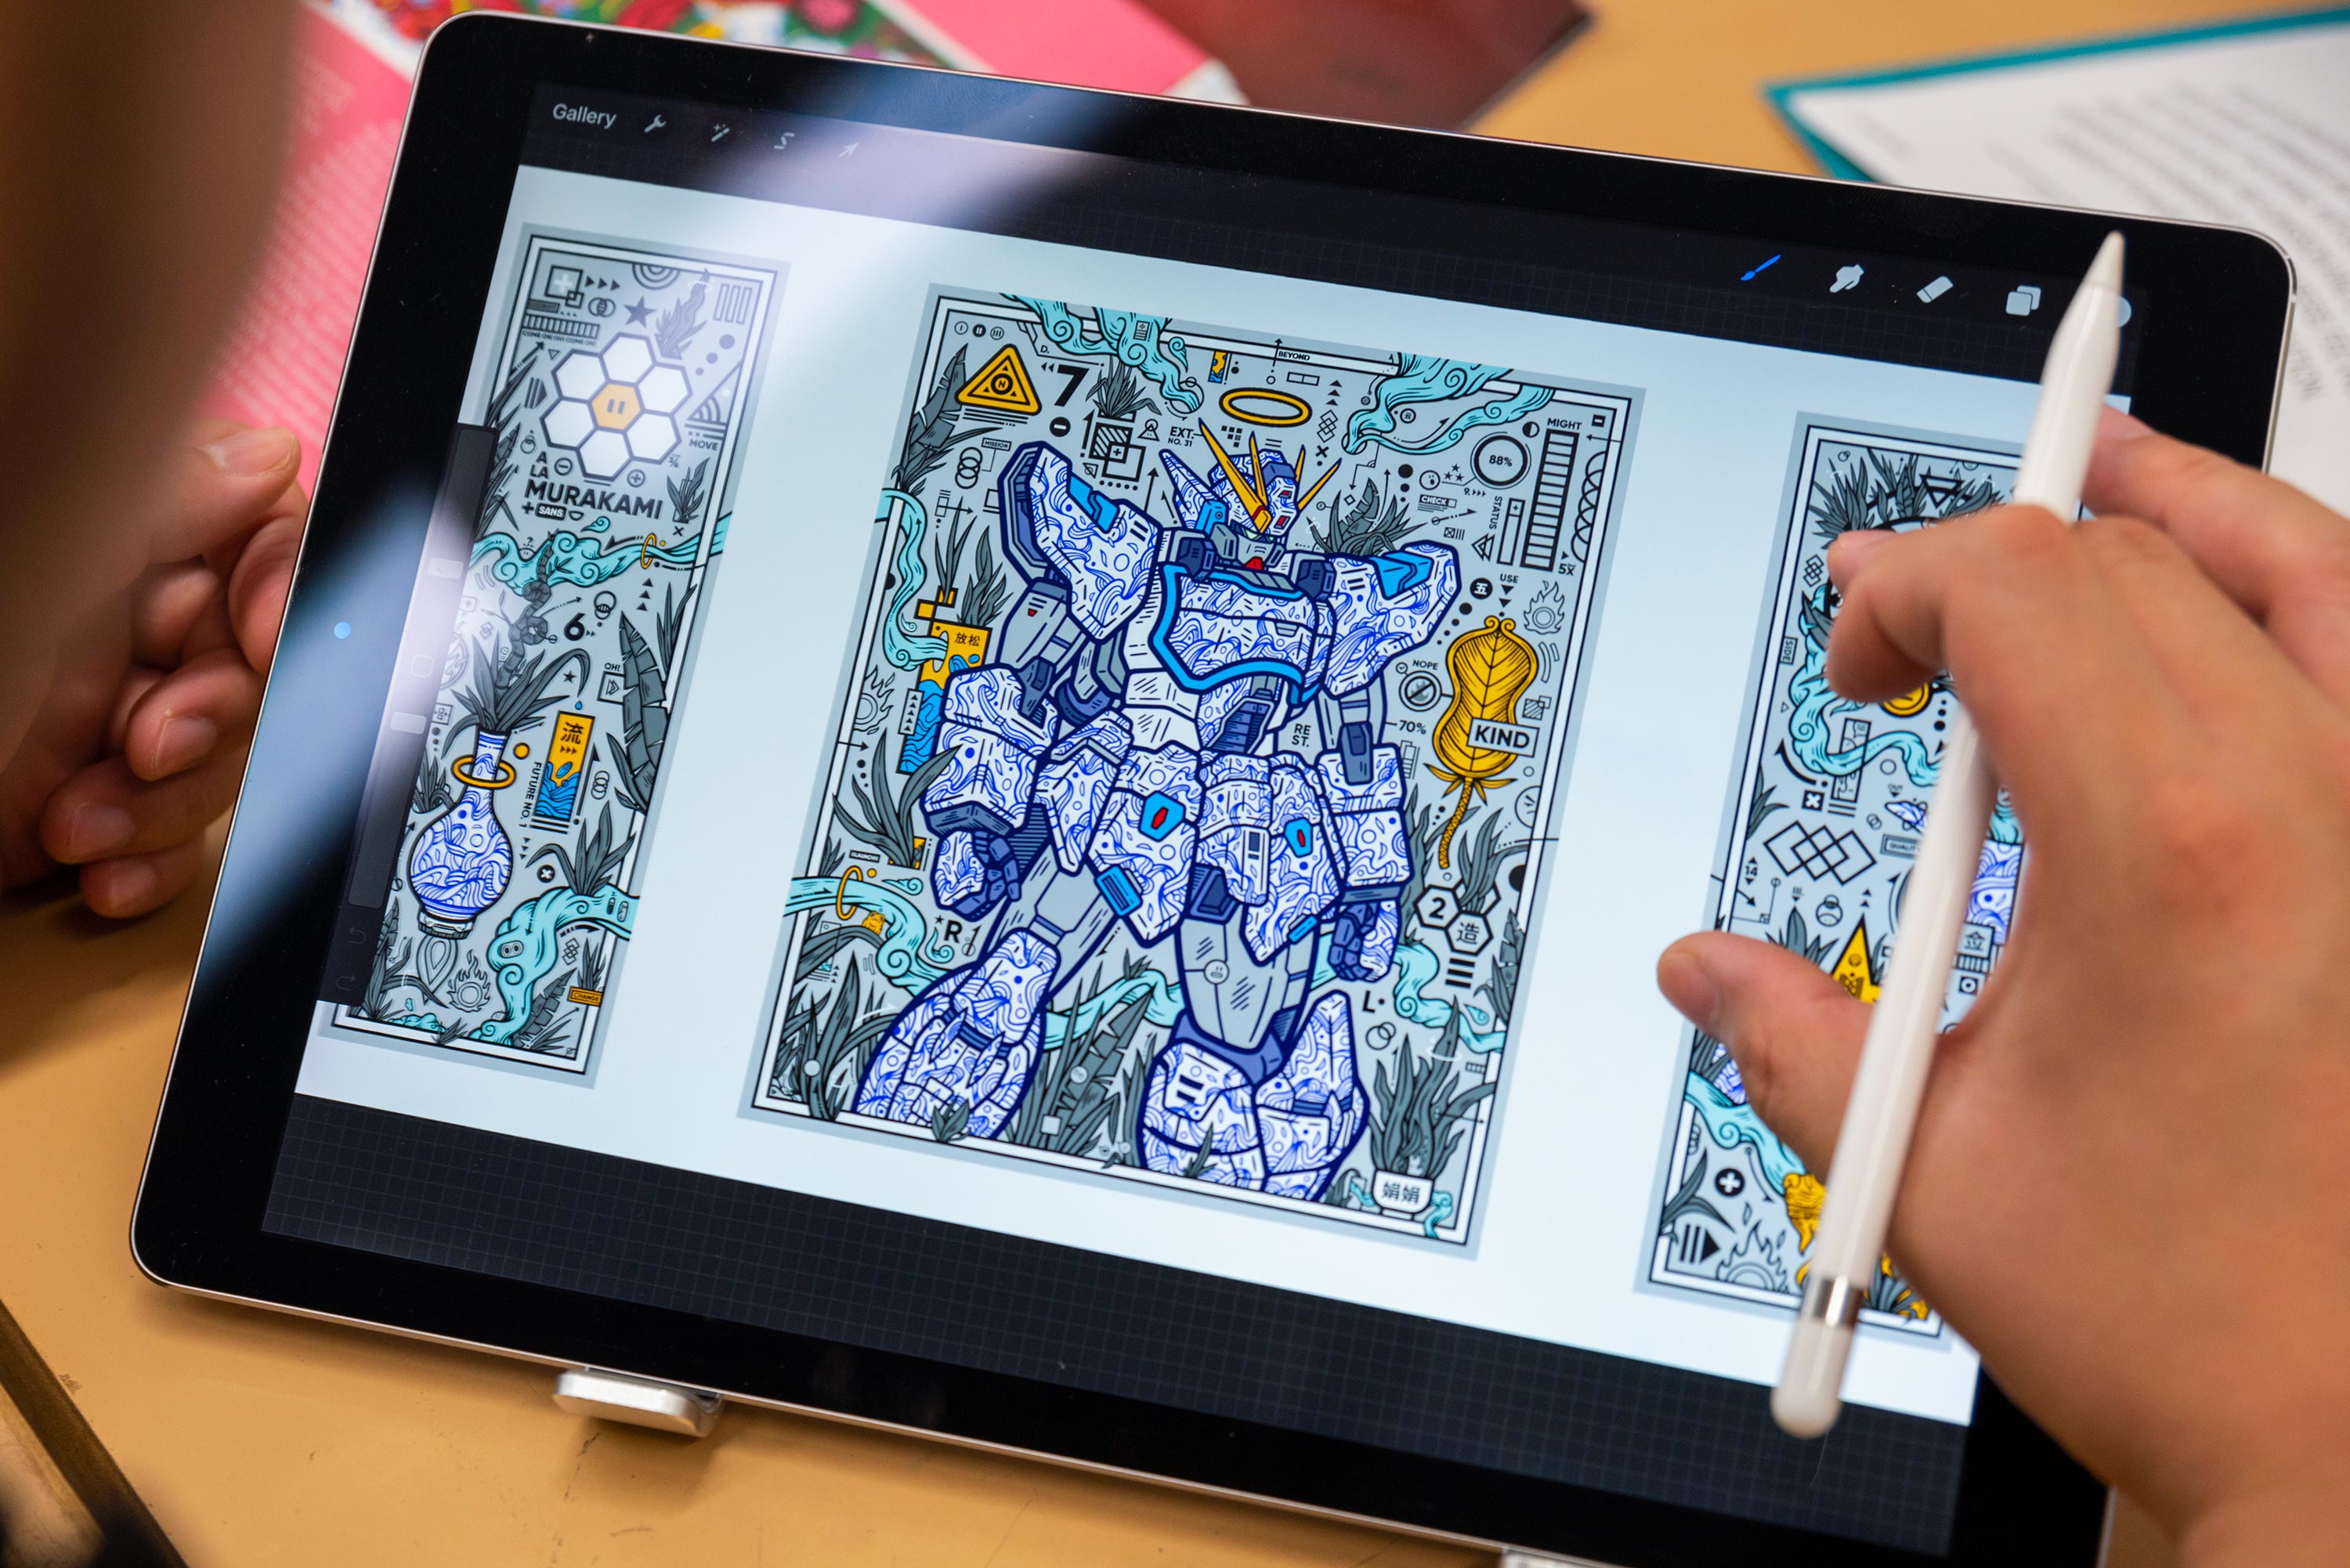 Jordan Wong drawing on iPad